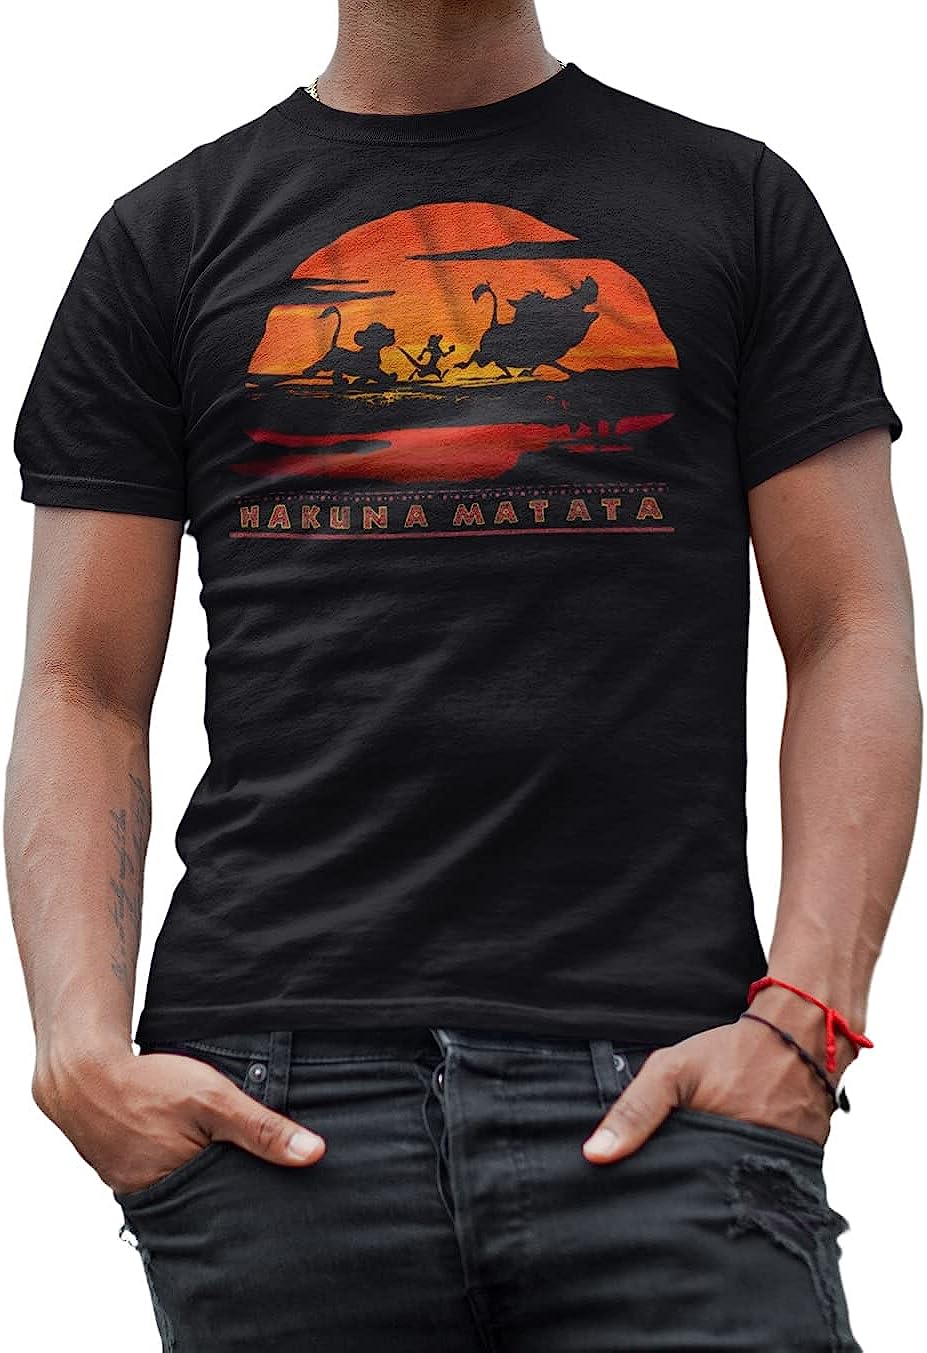 Disney Lion King "Hakuna Matata" Adult Graphic T-Shirt for Men (Black) 191685639545